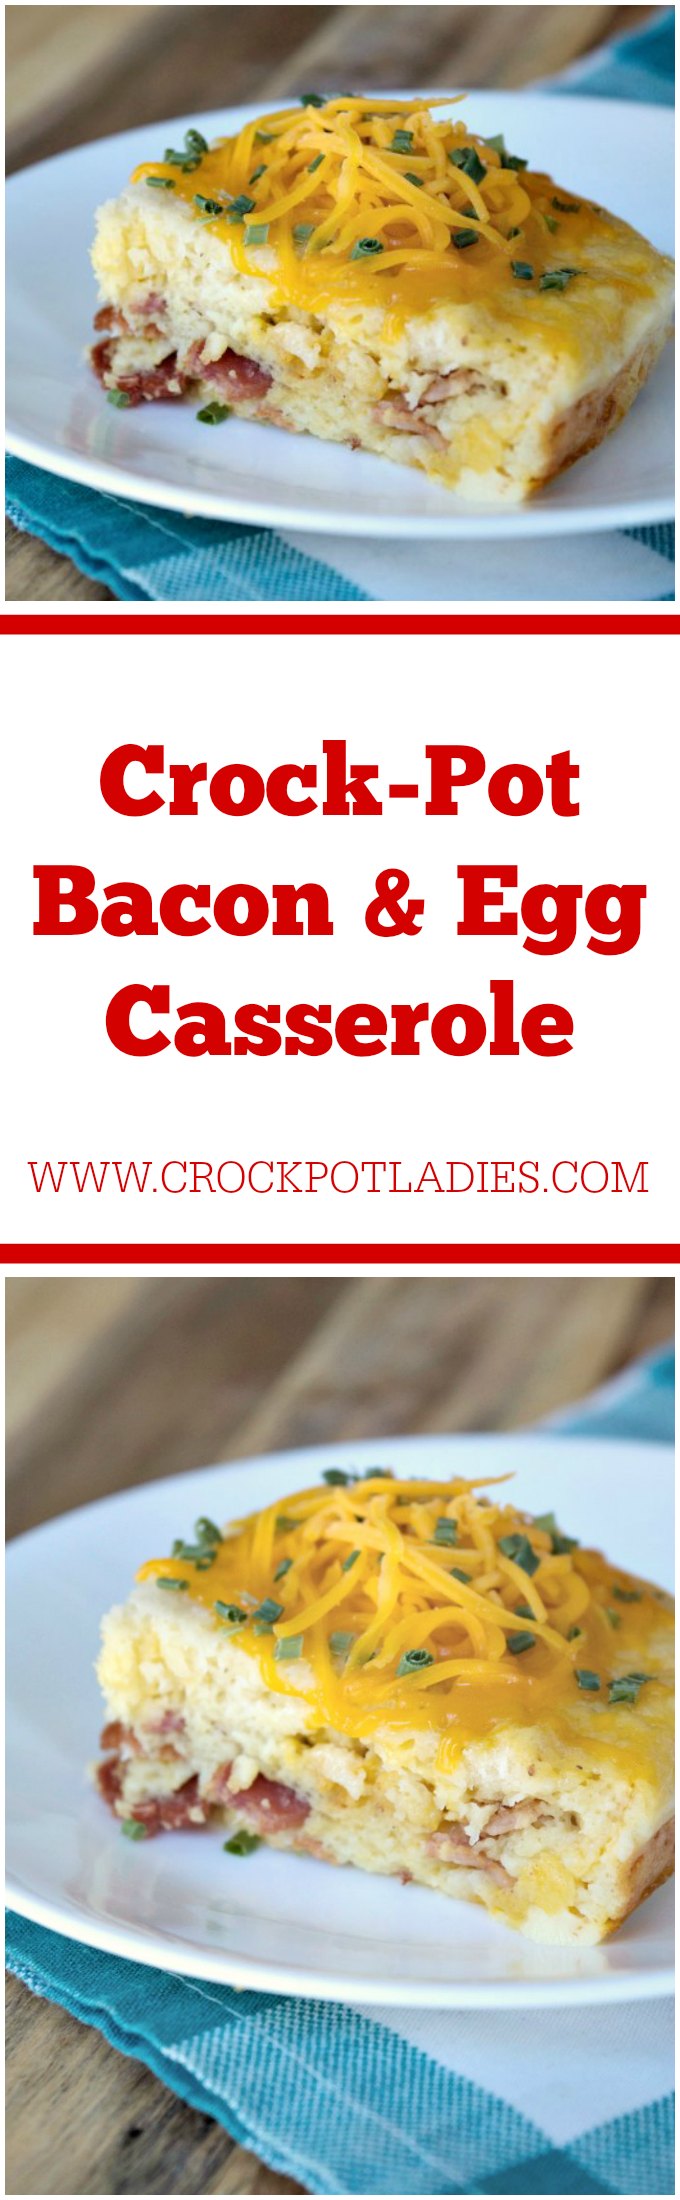 Crock-Pot Bacon & Egg Casserole